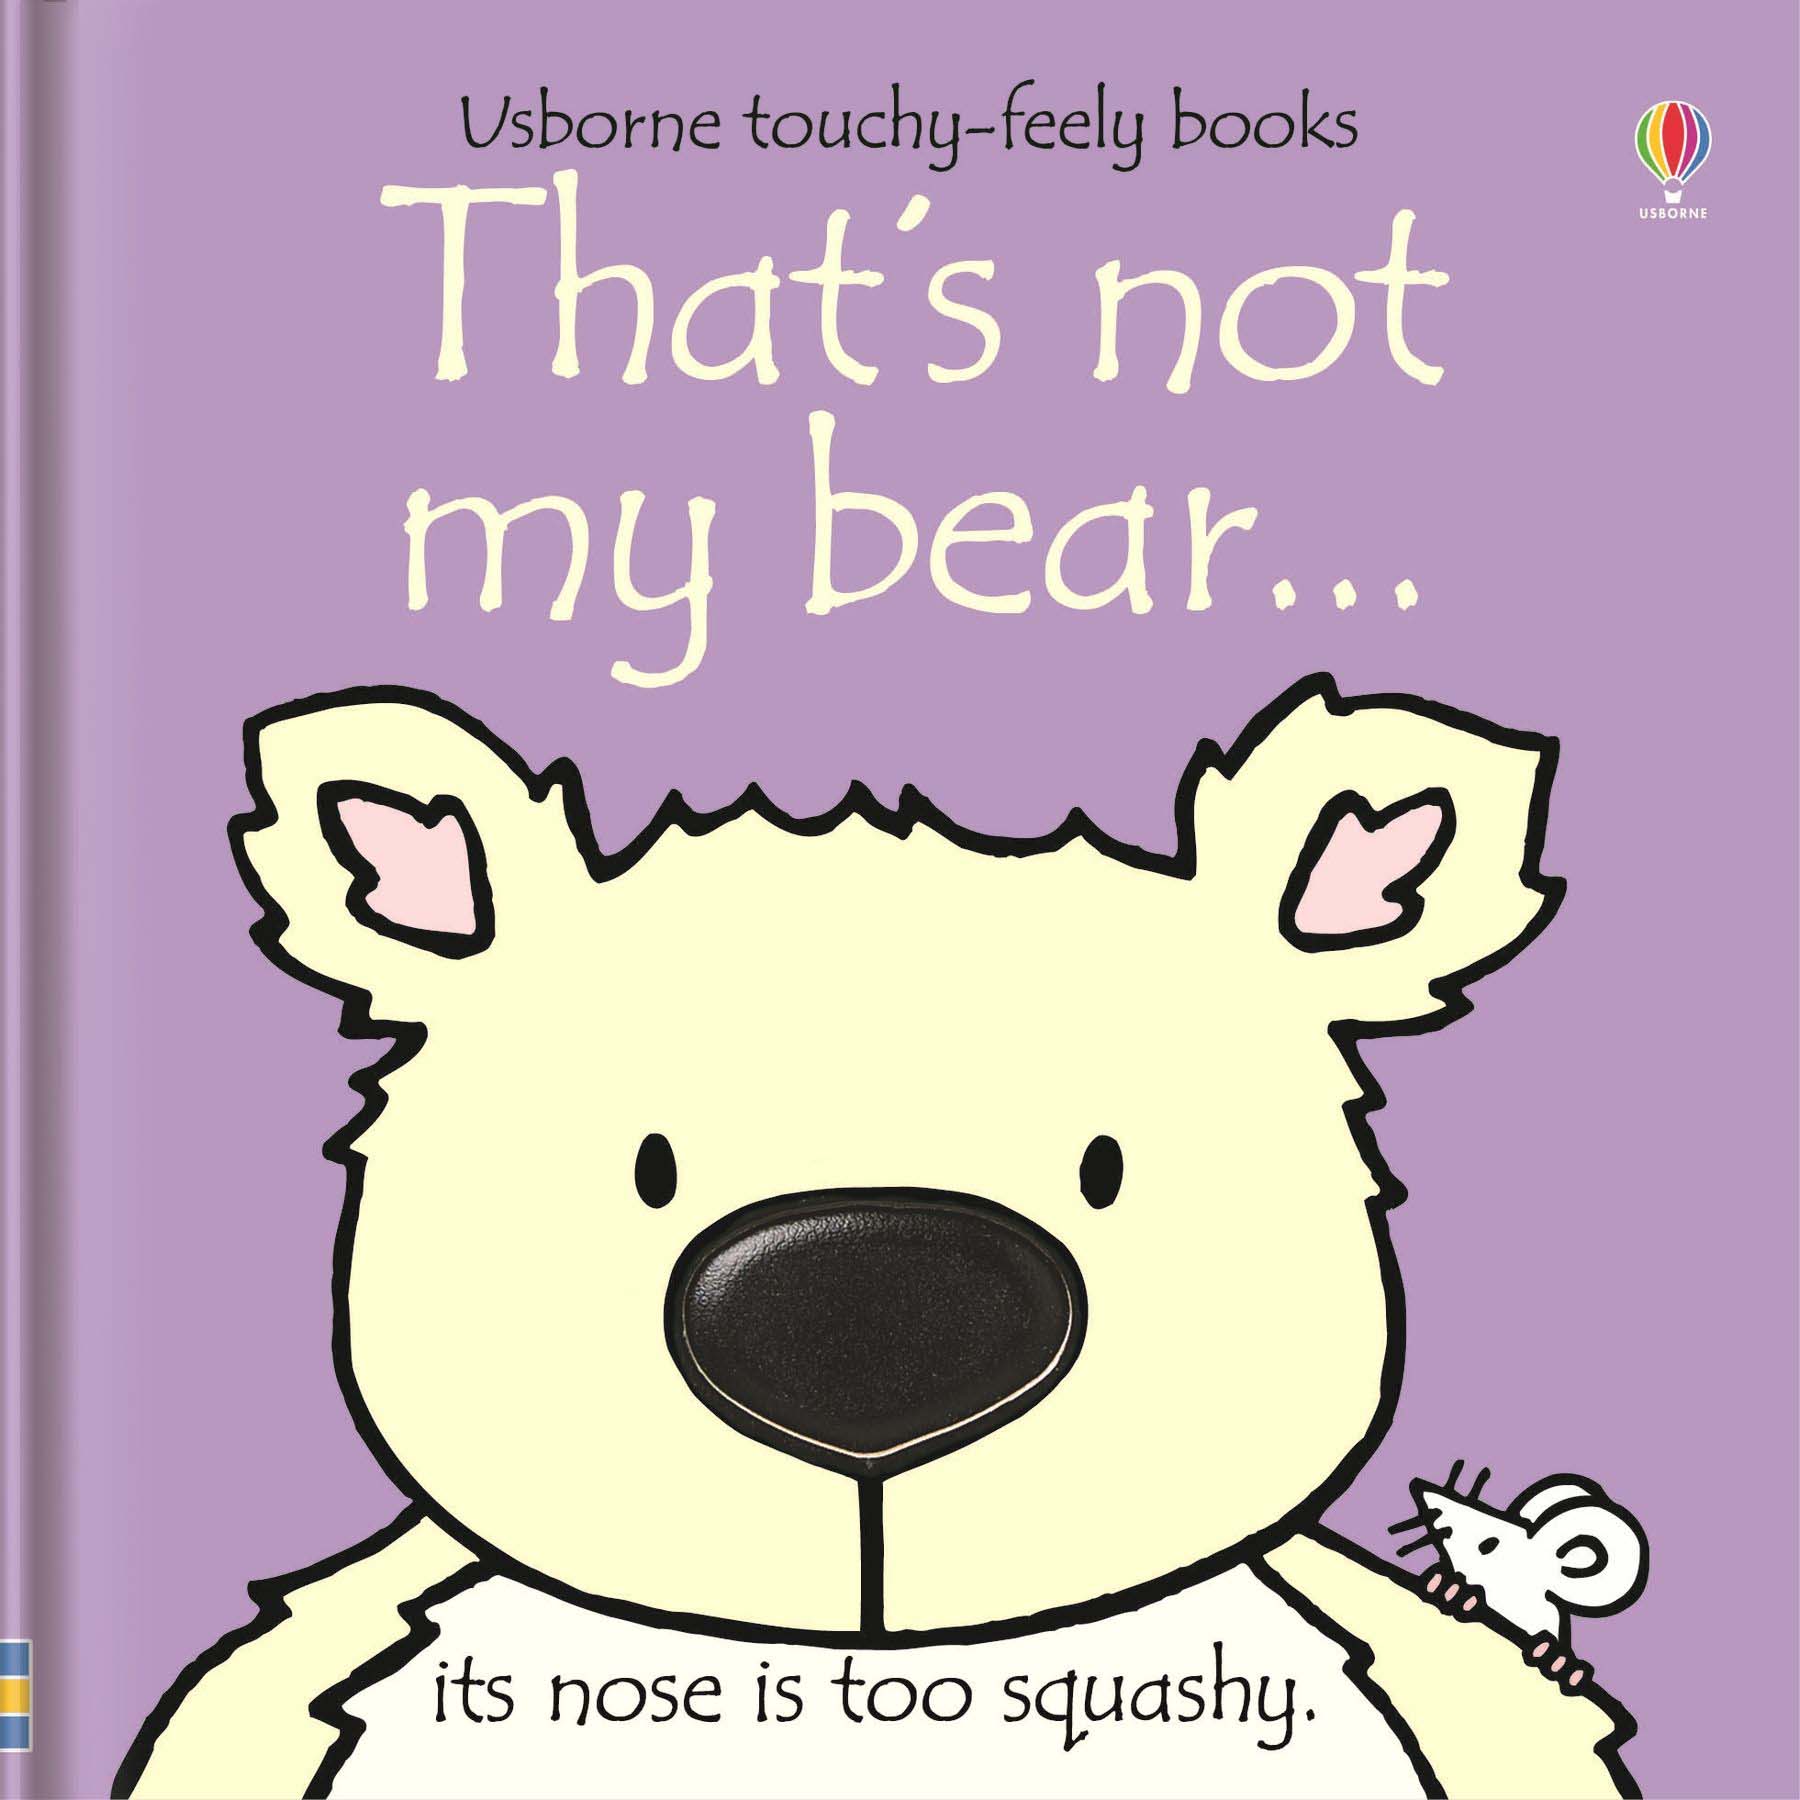 Usborne Touchy Feely Books Thats not my bear